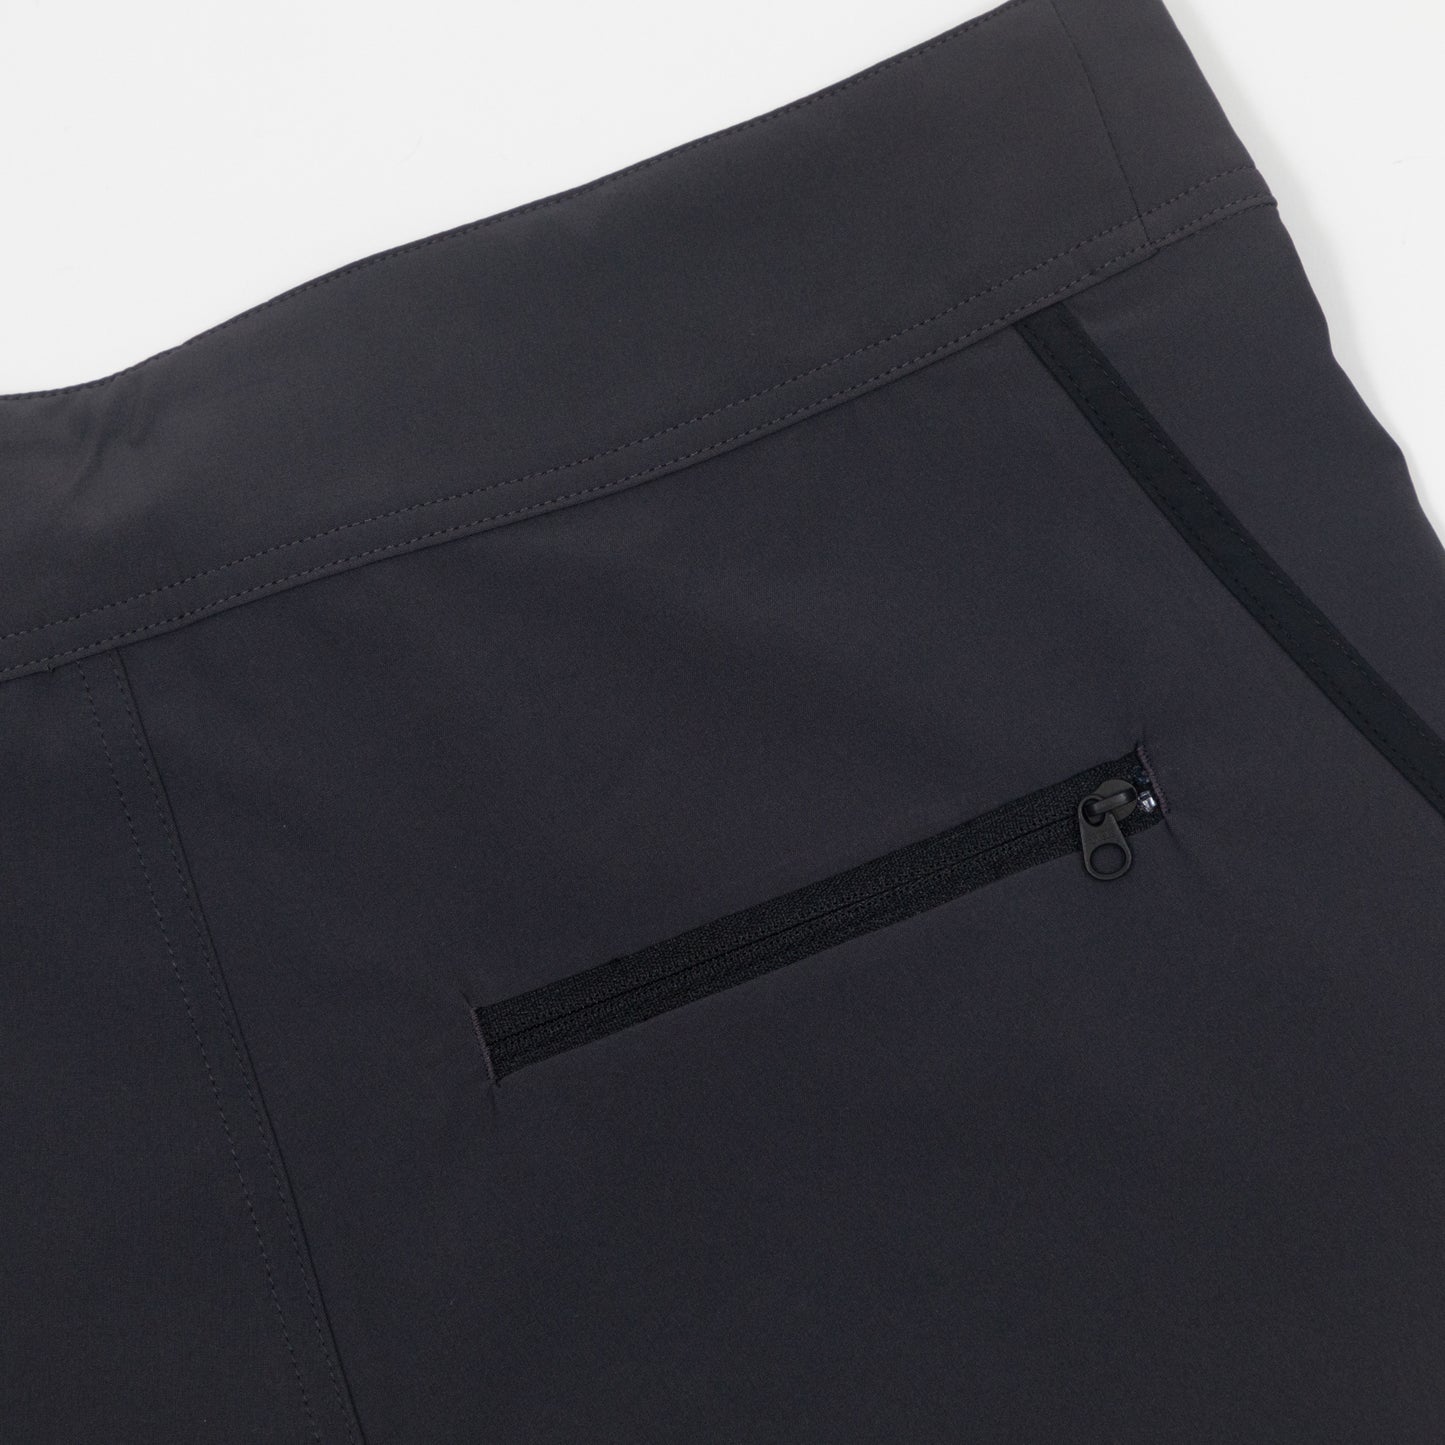 HELLY HANSEN Curve Board Shorts in BLACK